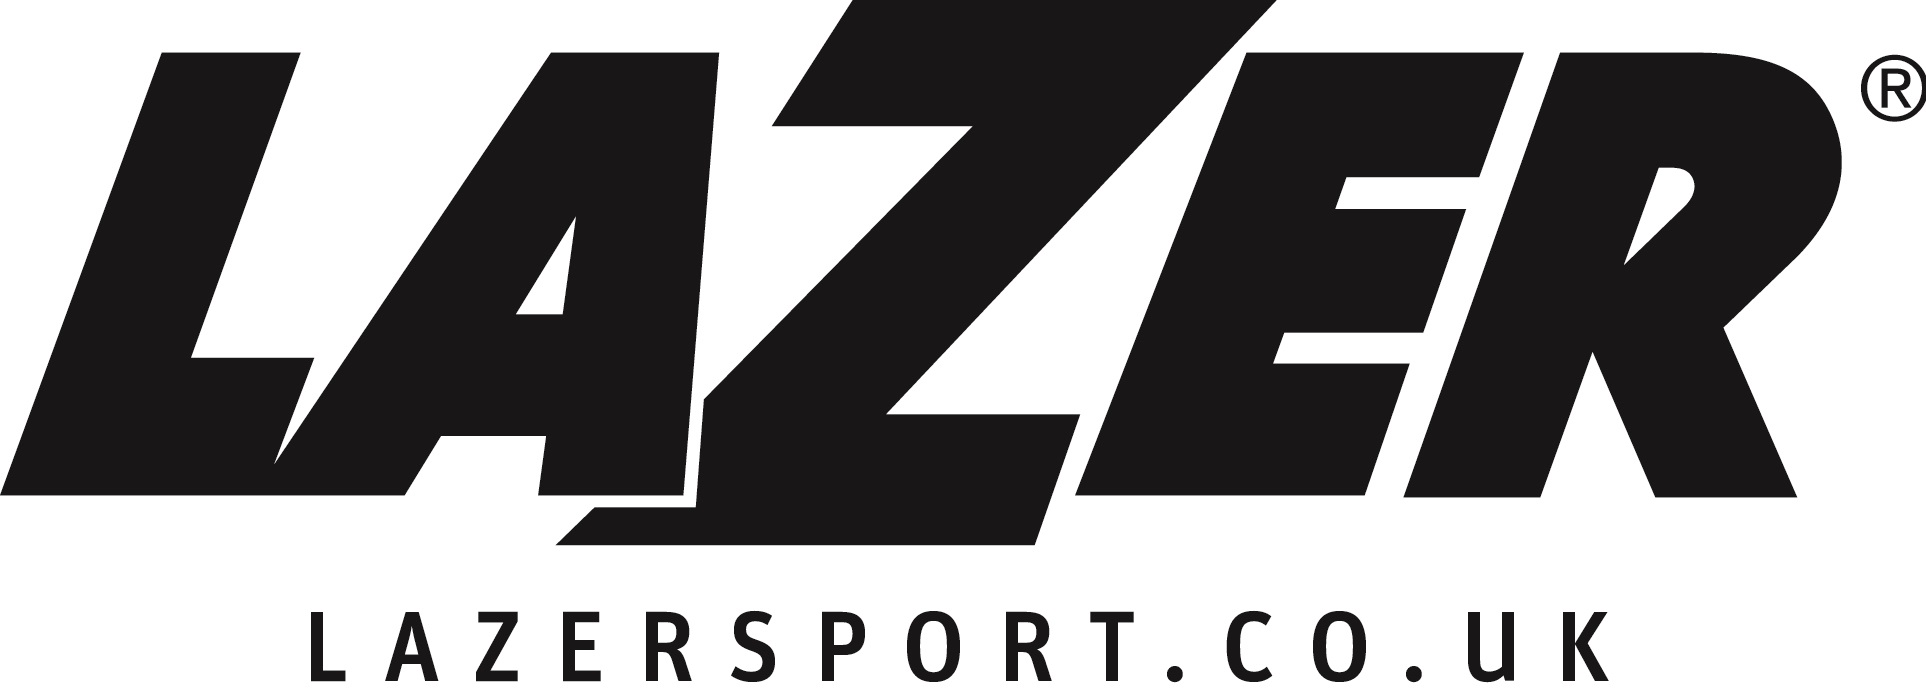 Lazer Sport Logo.jpg